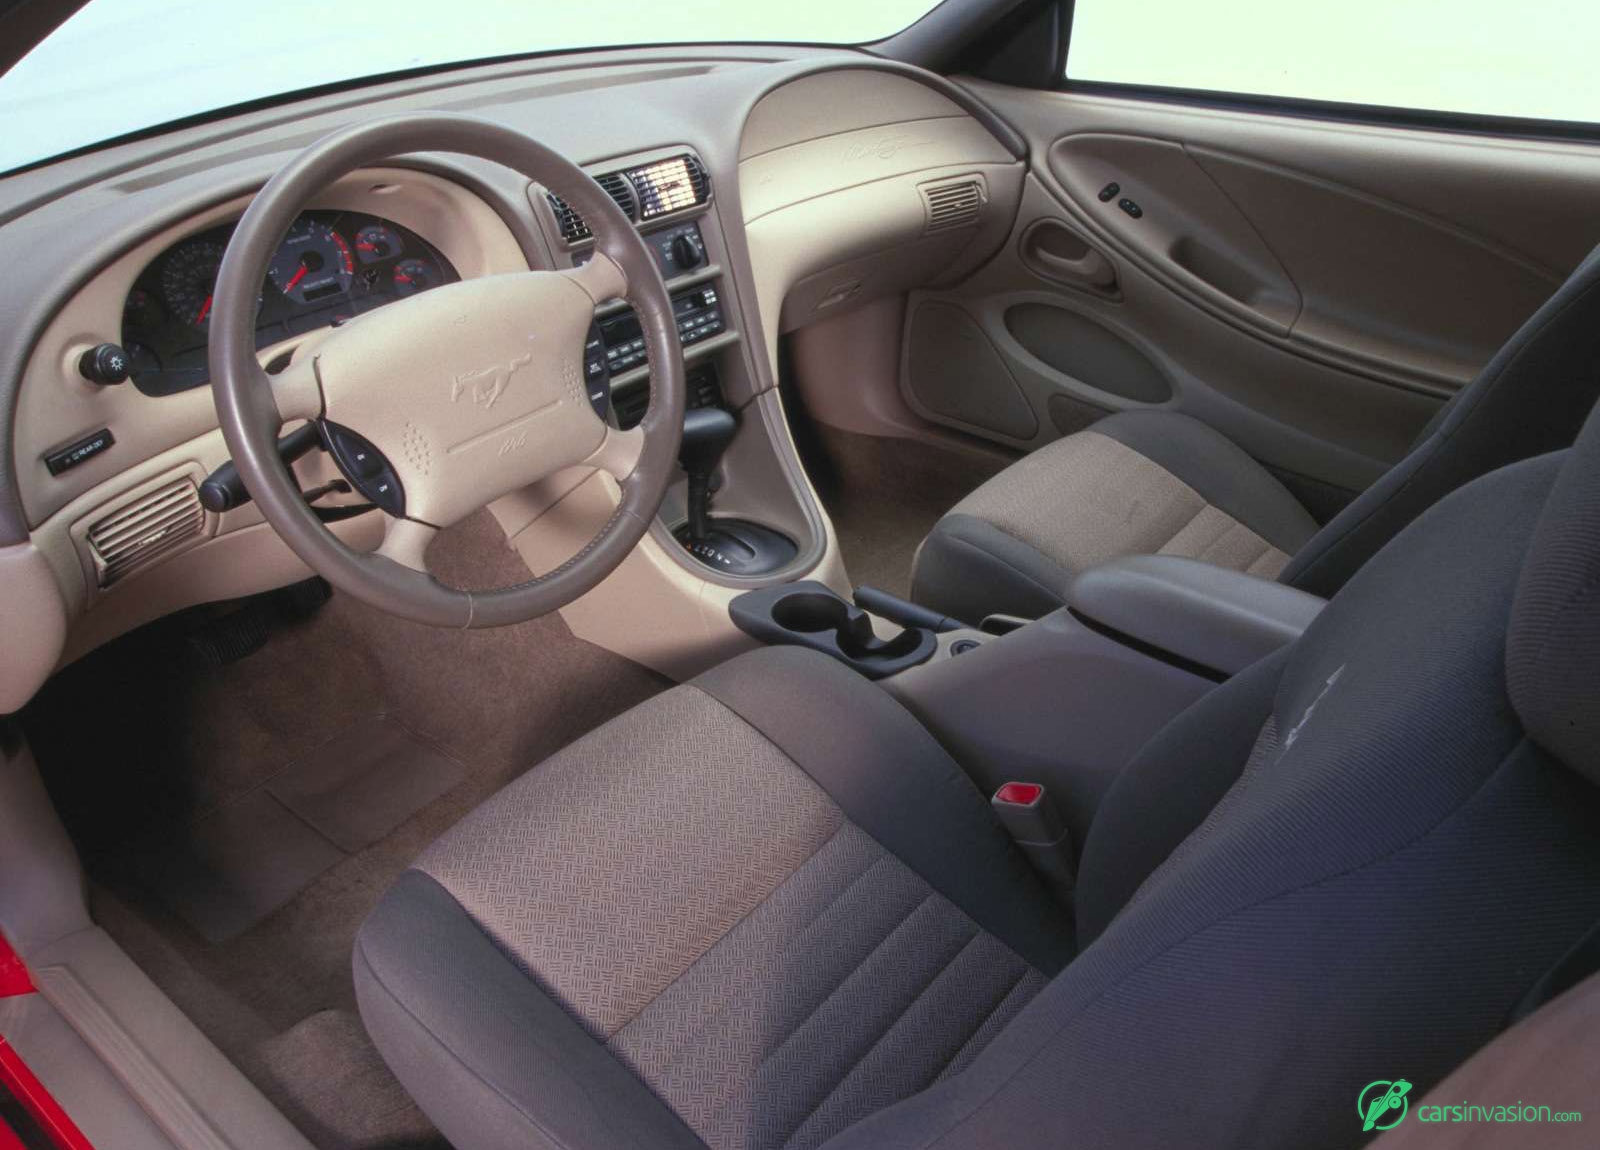 2000 Ford Mustang GT Interior